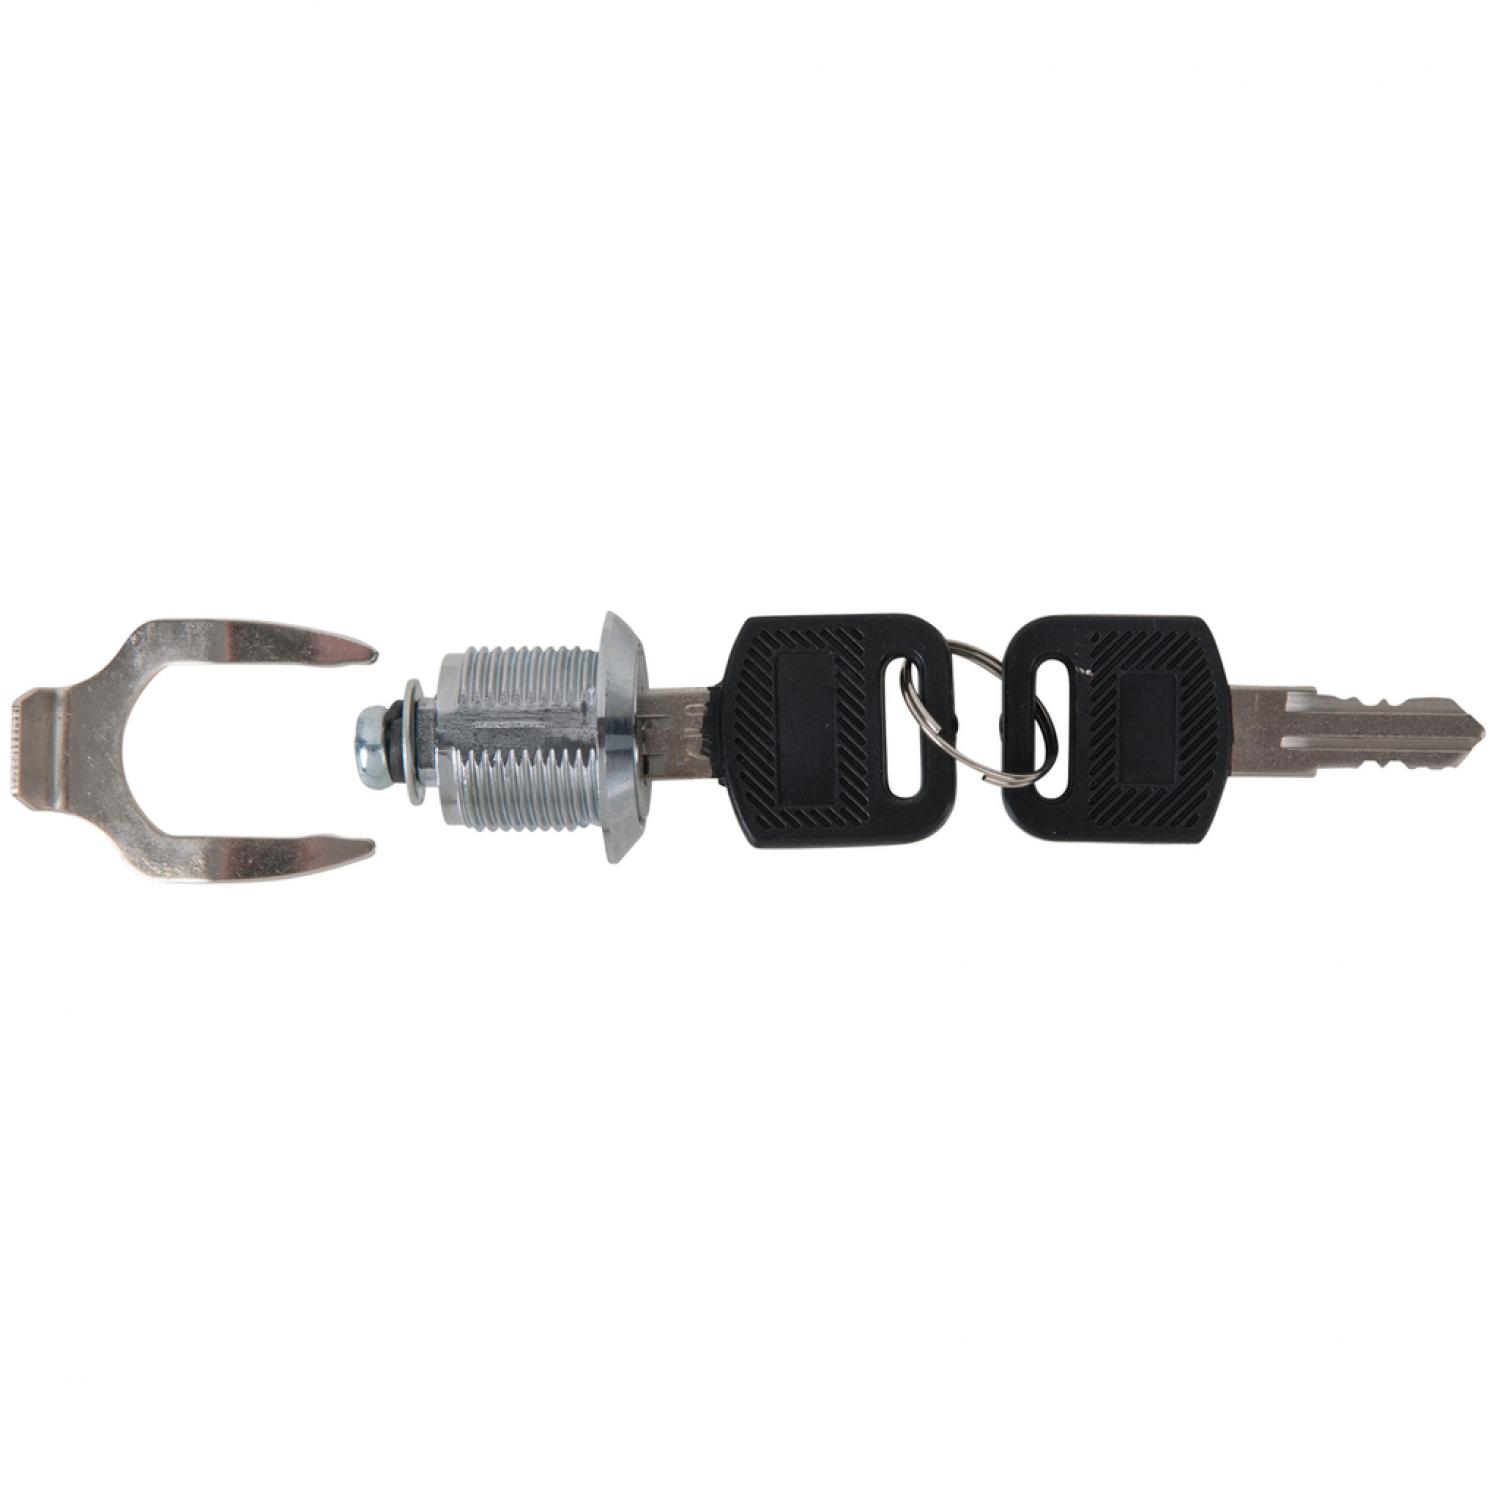 картинка ключ RACING/ECOline с 2 ключами от магазина "Элит-инструмент"